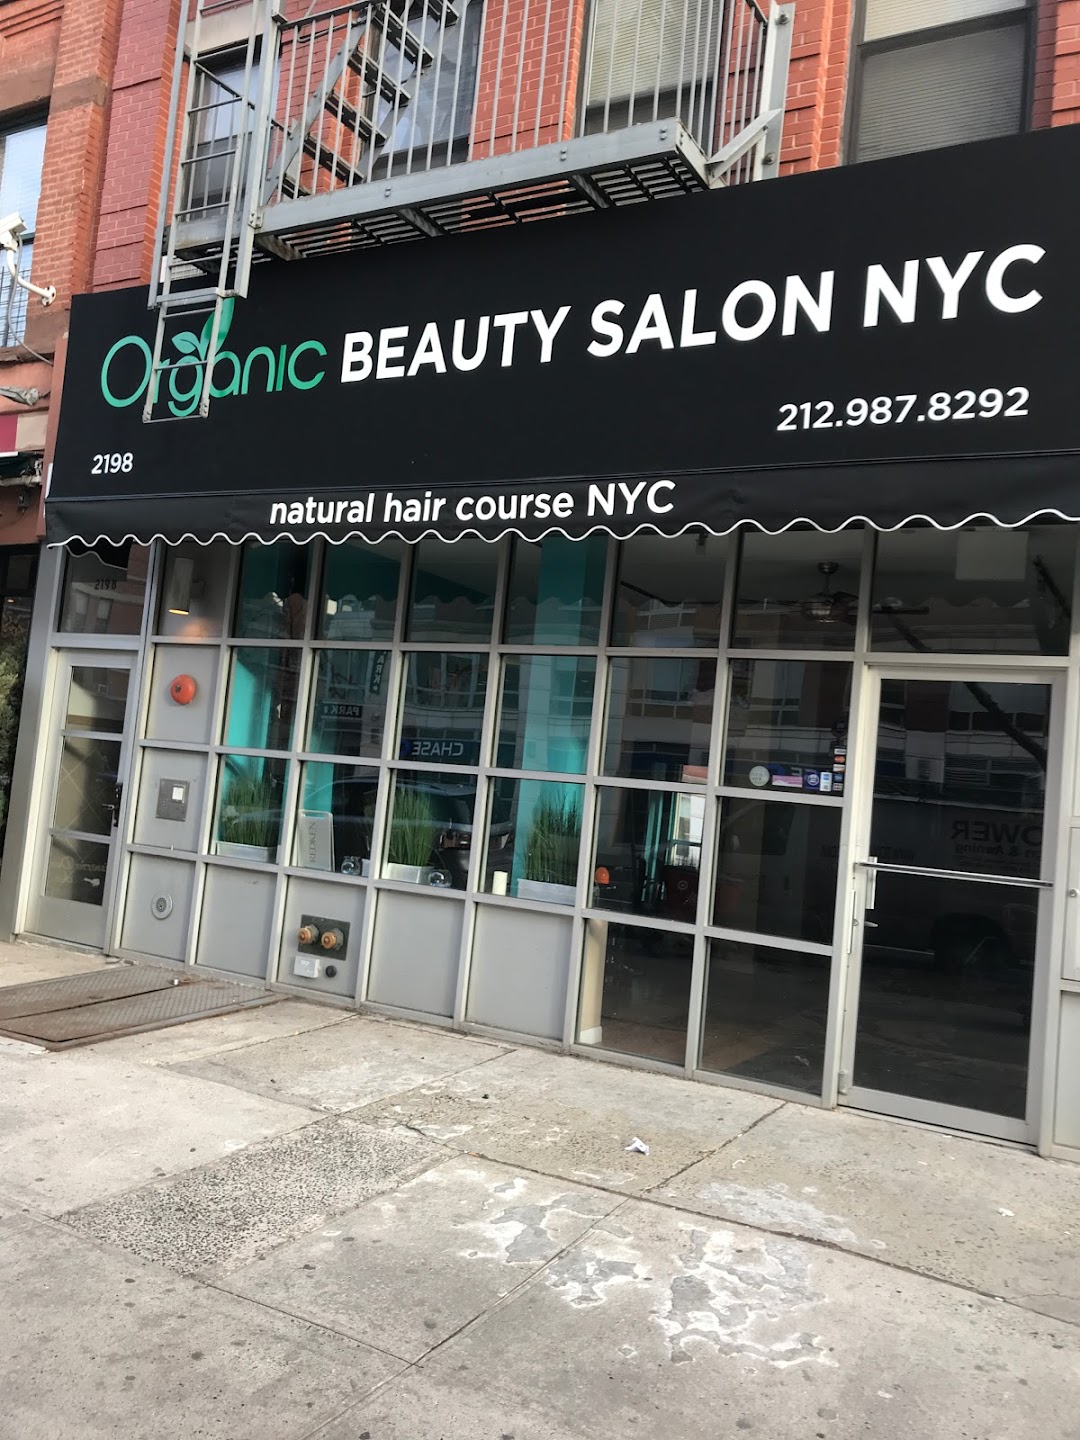 Organic beauty salonNYC